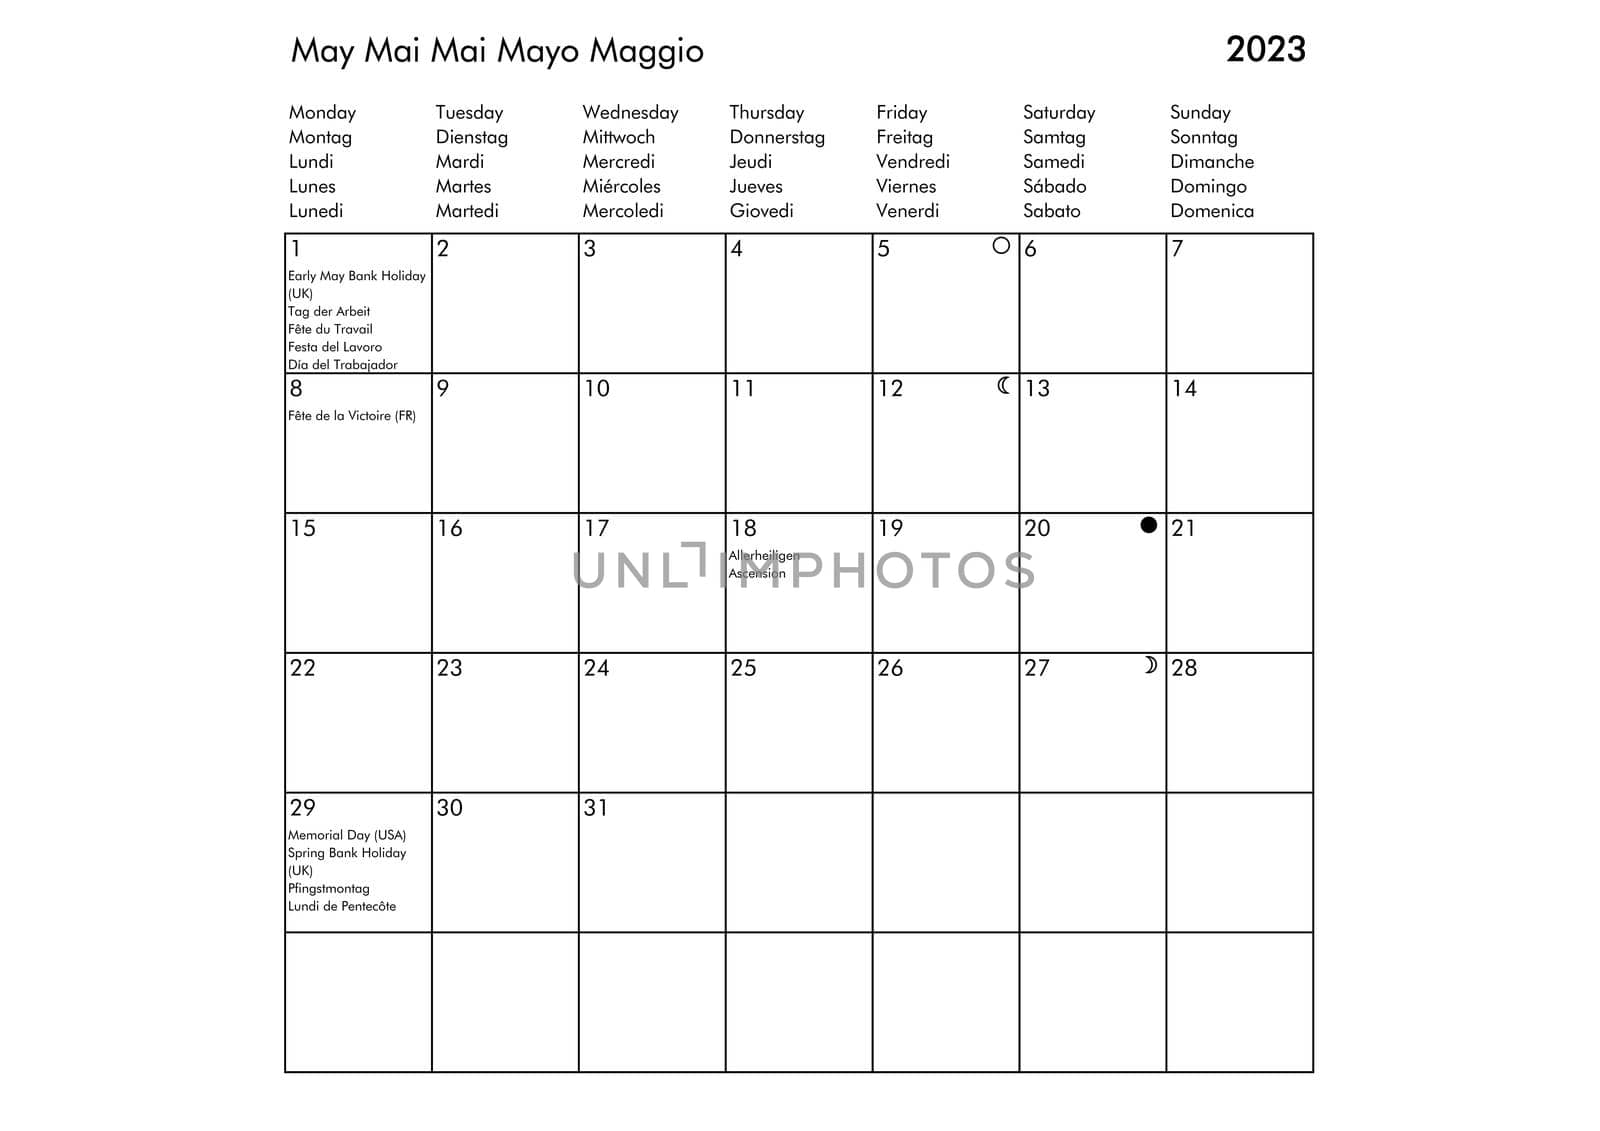 May Multilingual year 2023 calendar by claudiodivizia